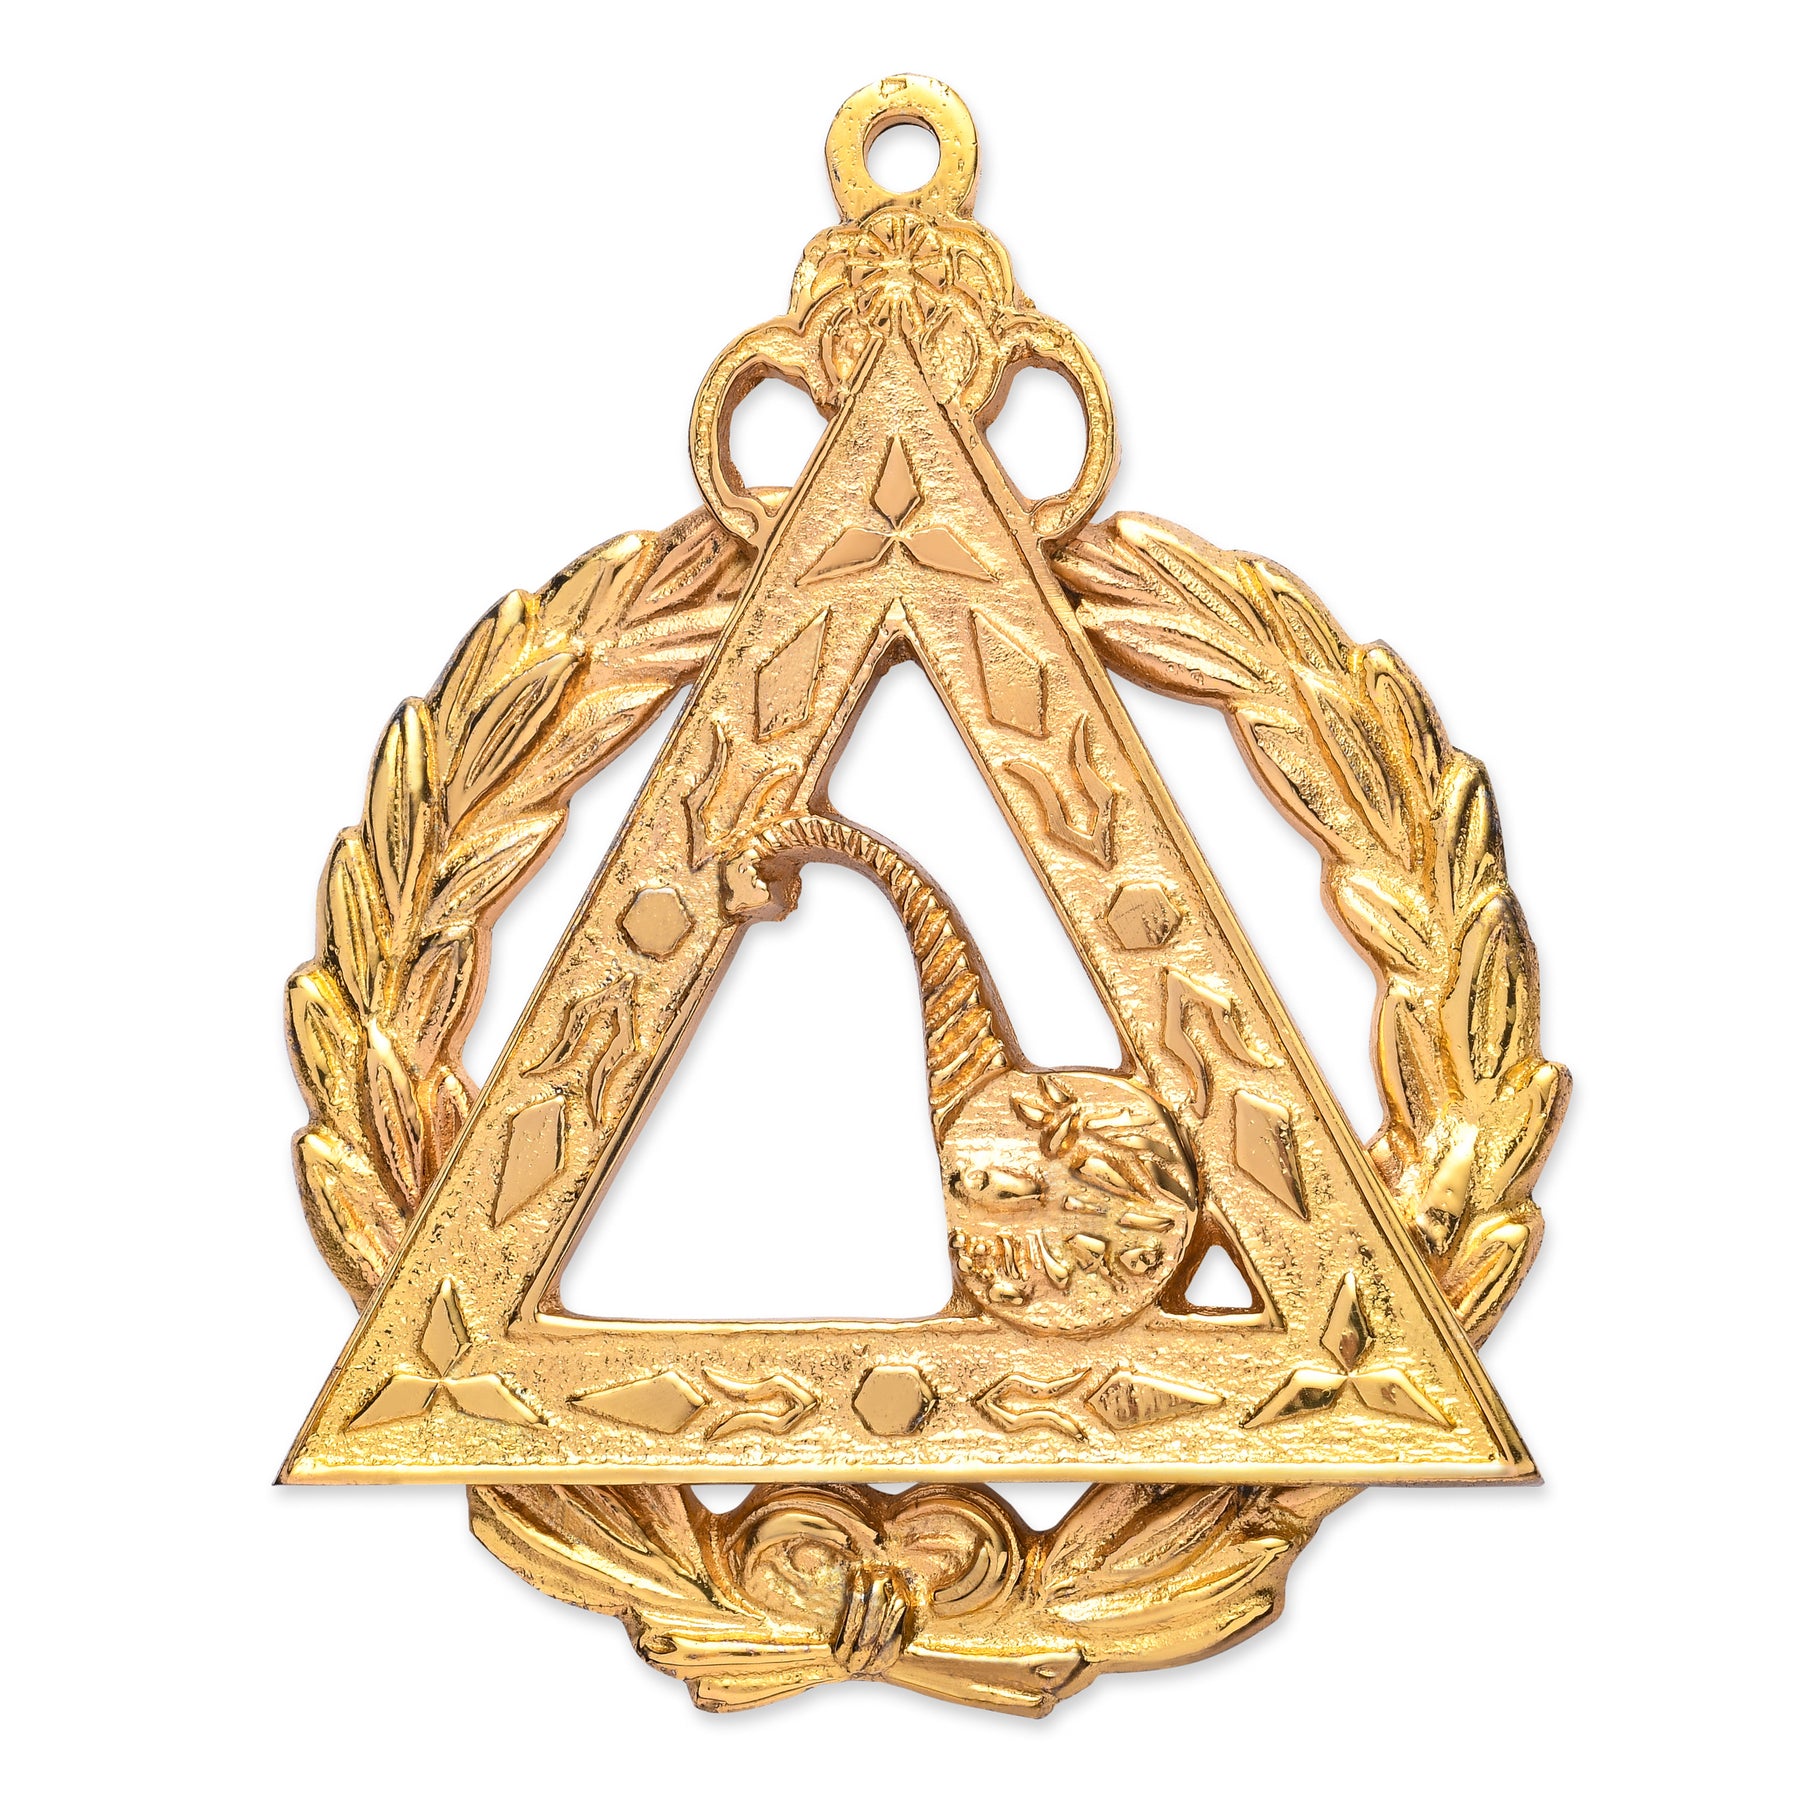 Grand Steward Royal Arch Chapter Officer Collar Jewel - Gold Metal - Bricks Masons